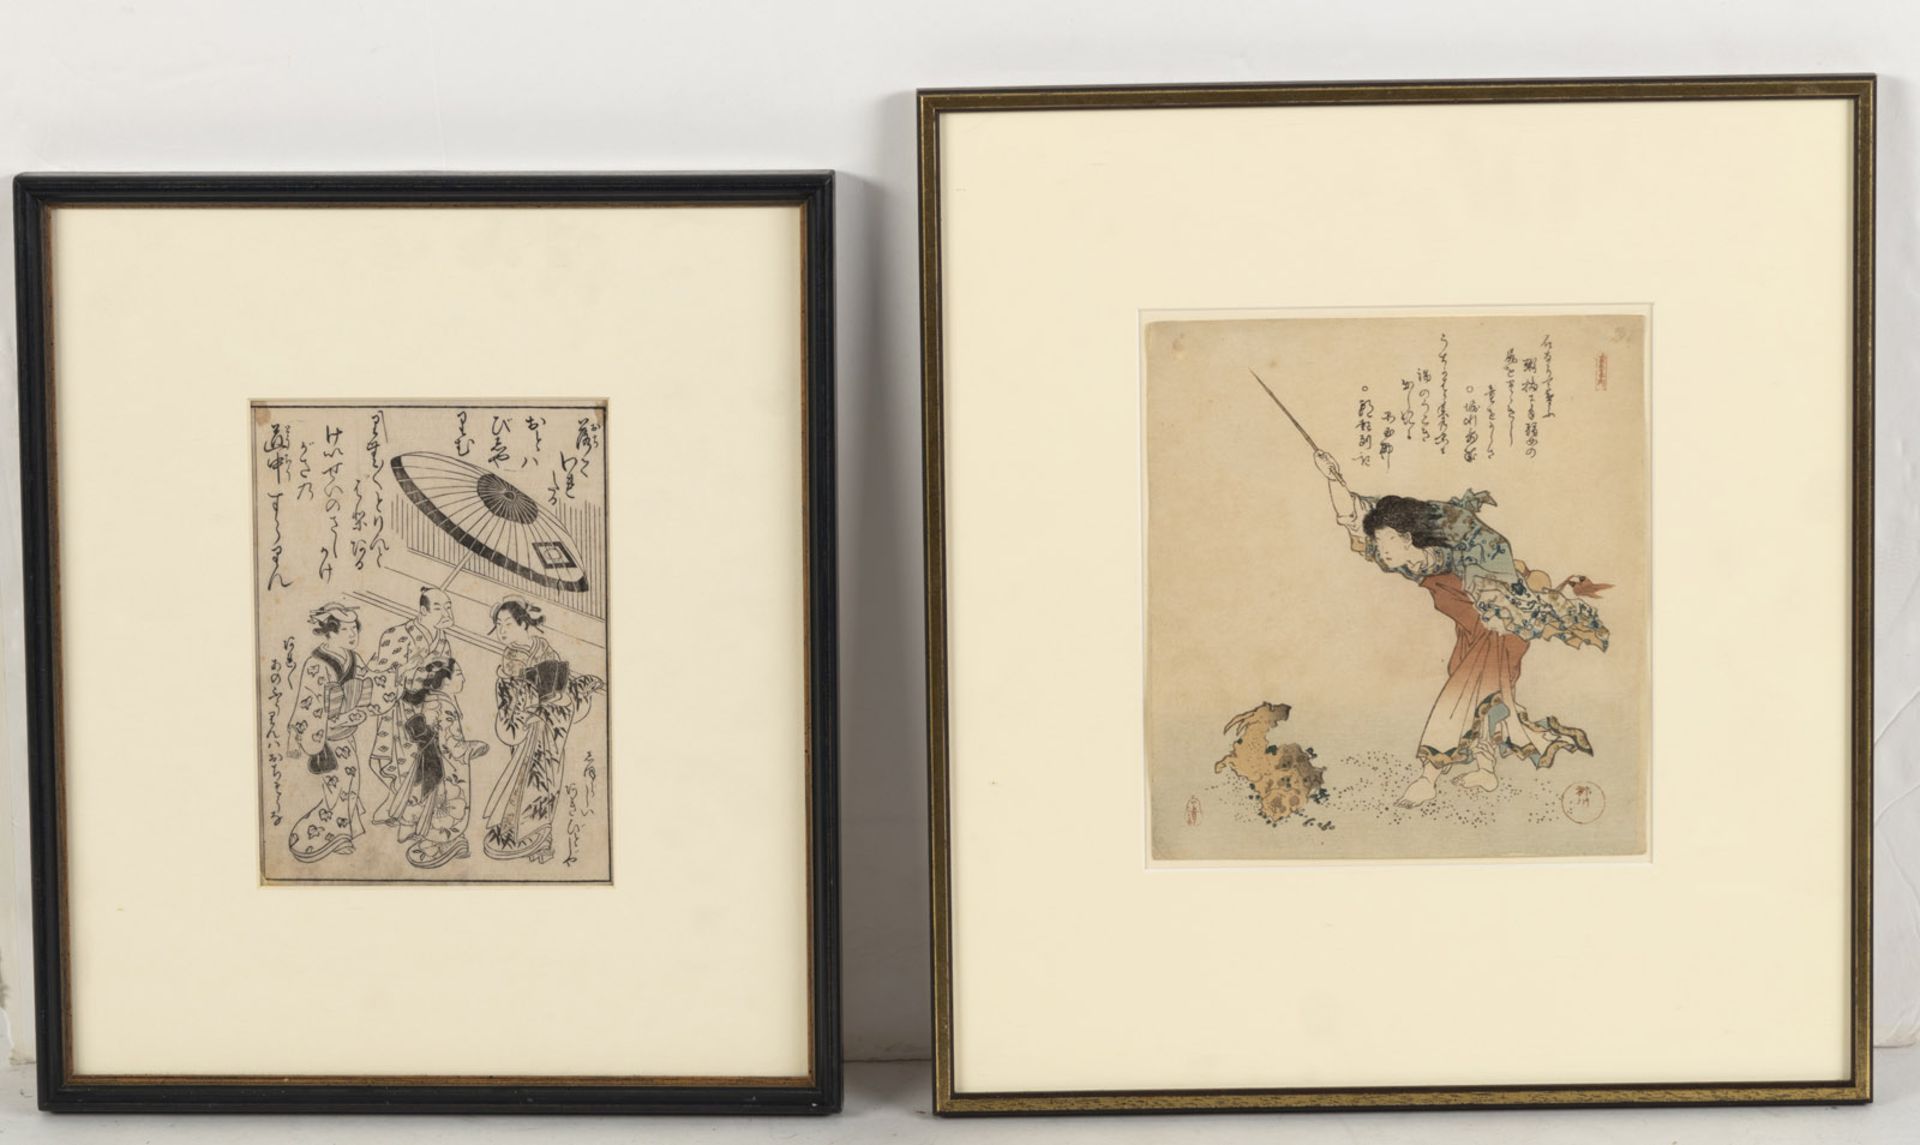 A SURIMONO REPRINT OF SHIGENOBU I (1787-1832): KOSHOHEI TURNING STONES INTO GOATS, AND A BOOK PAGE - Image 2 of 2